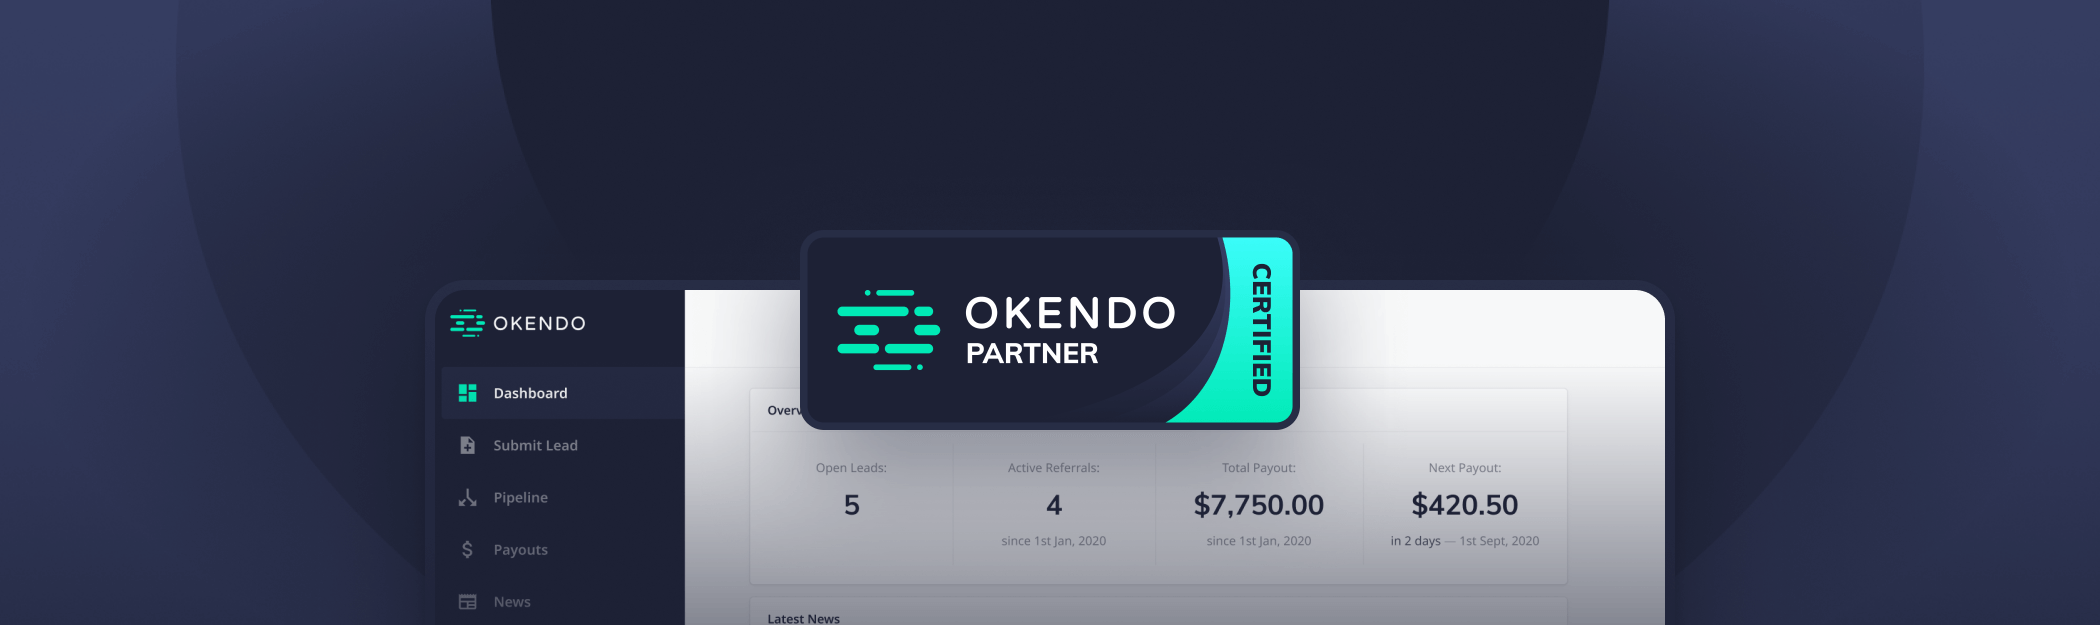 Launch of Okendo’s Partner Program!